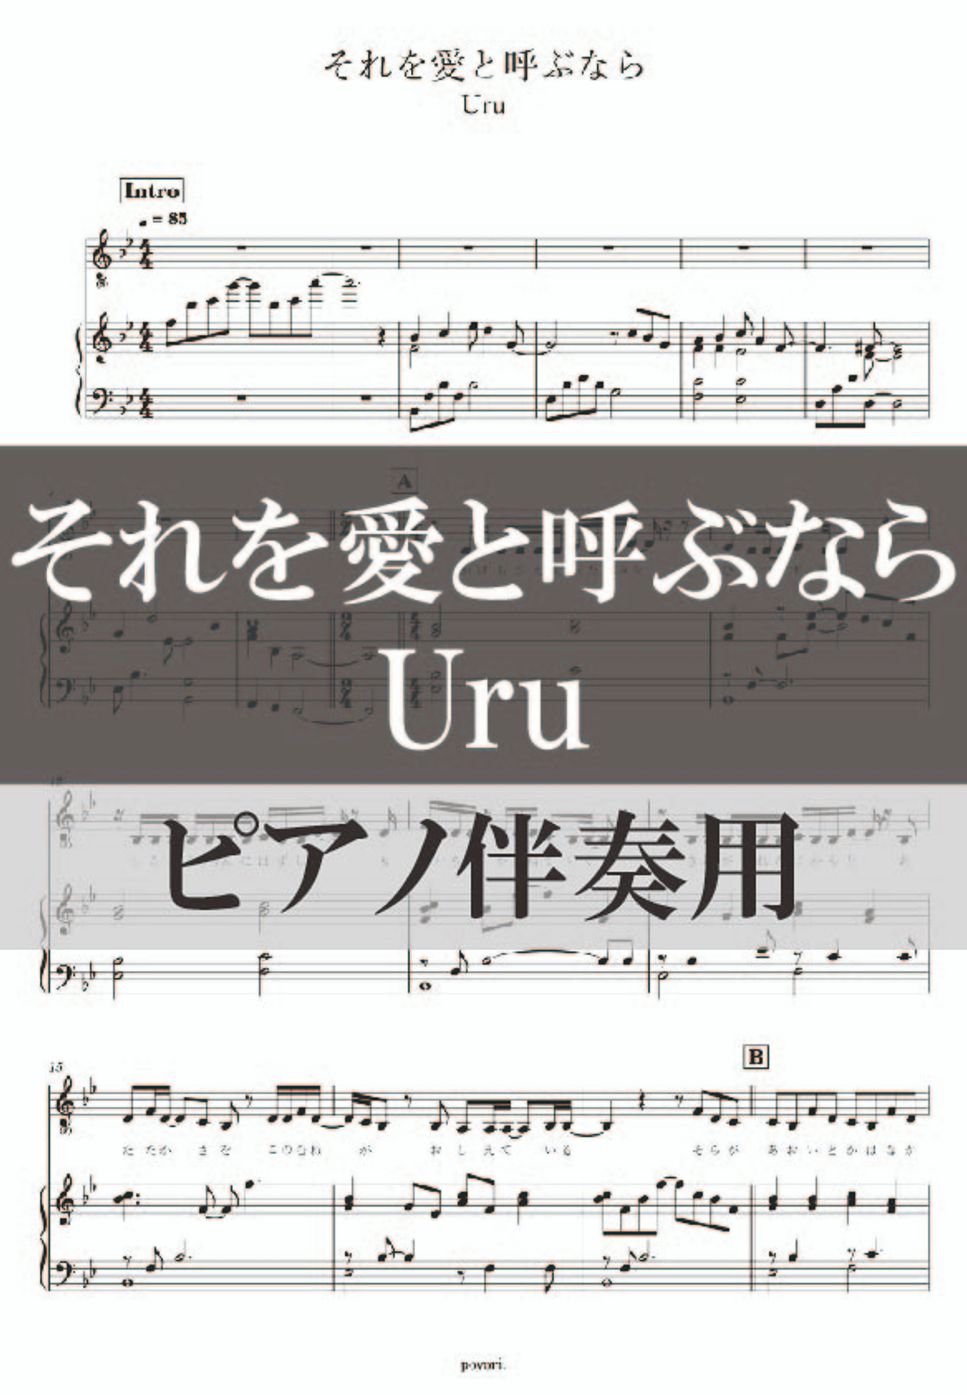 Uru - それを愛と呼ぶなら (ピアノ伴奏) by poyori.